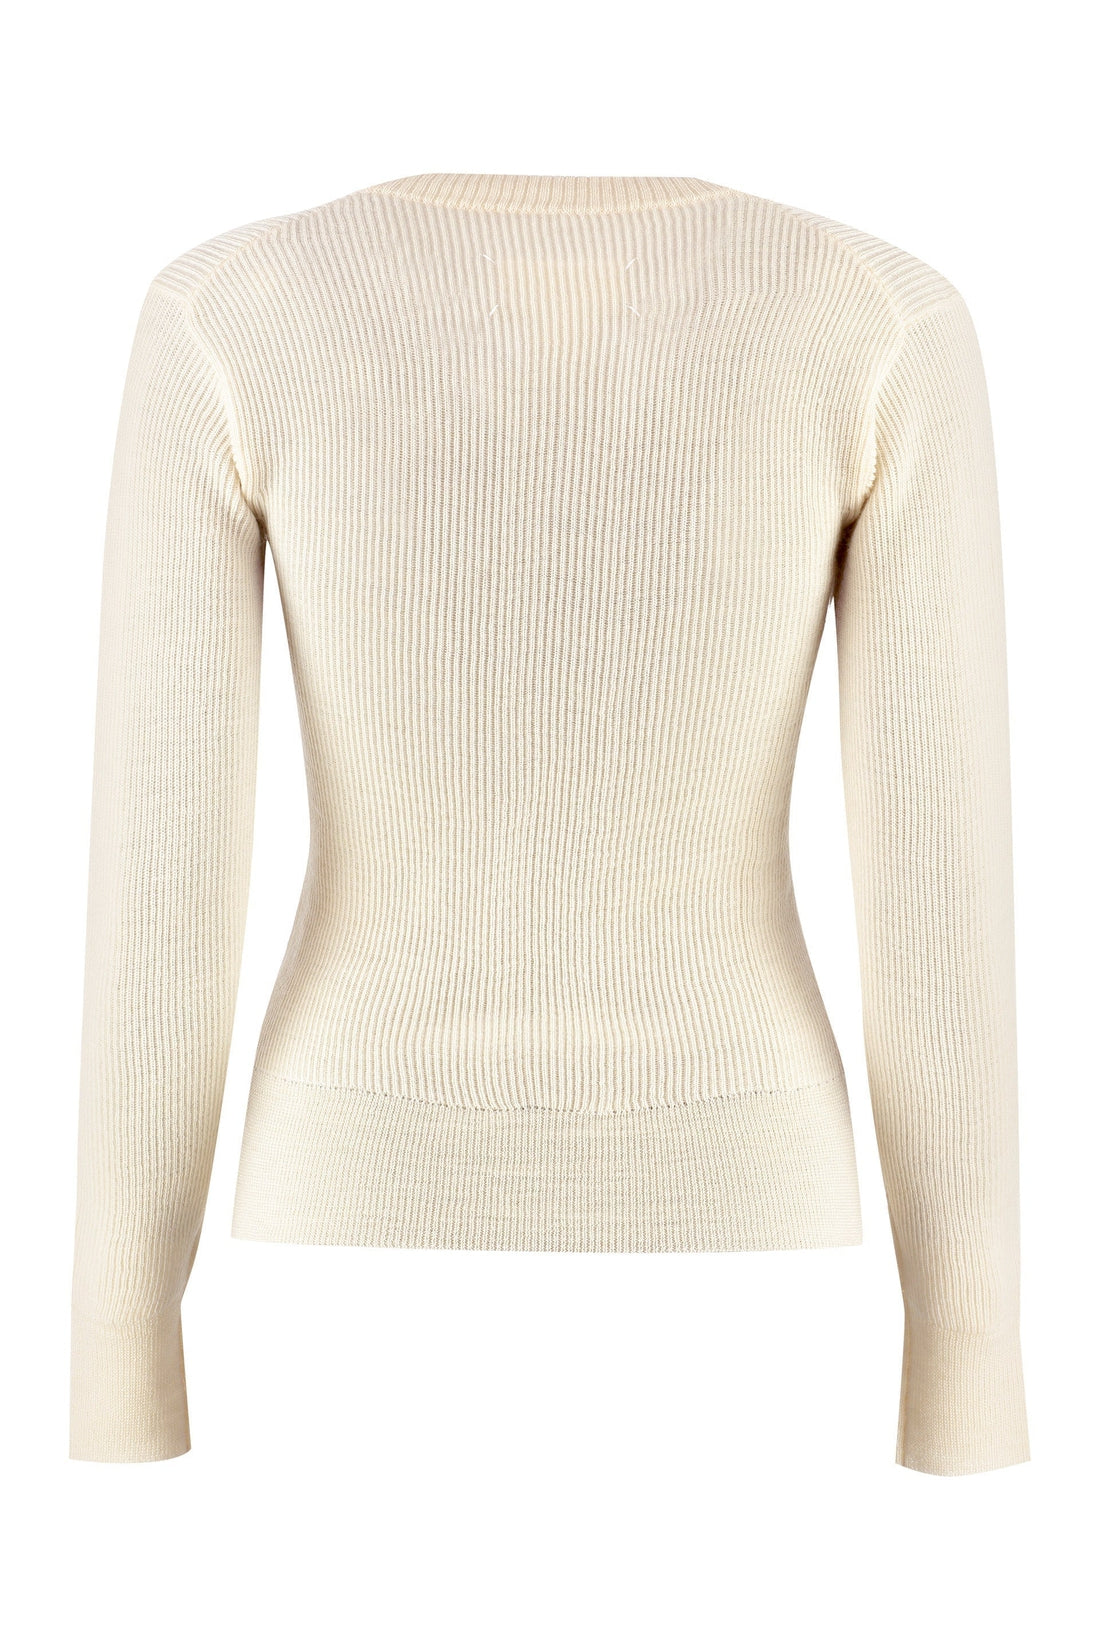 Maison Margiela-OUTLET-SALE-Ribbed sweater-ARCHIVIST